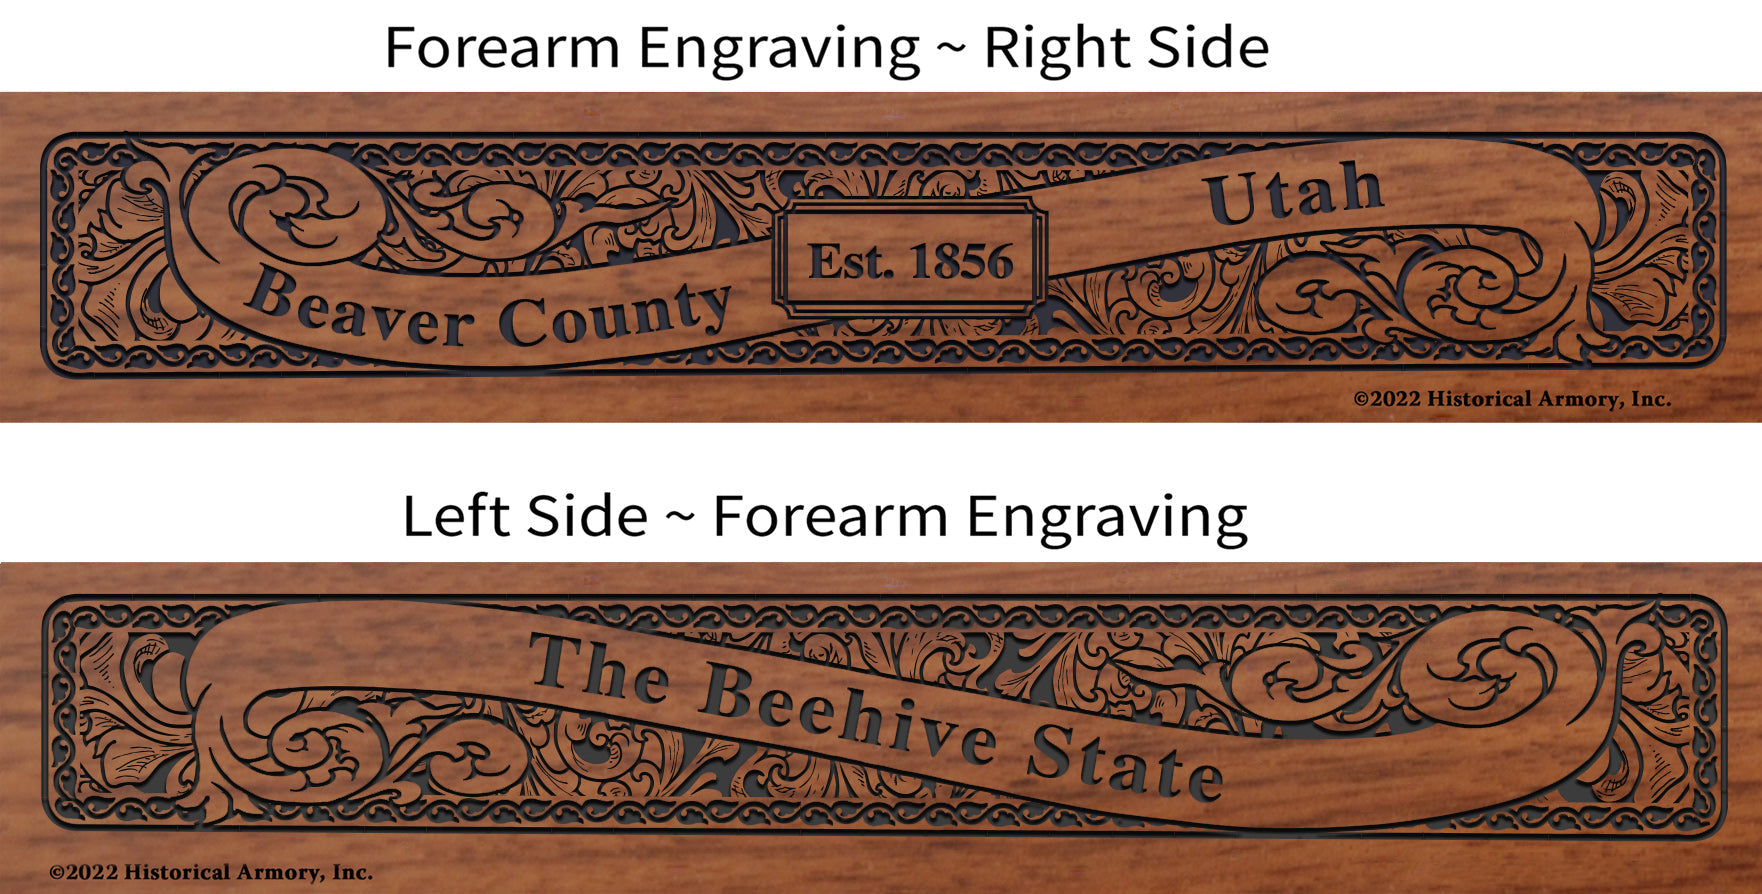 Beaver County Utah Engraved Rifle Forearm